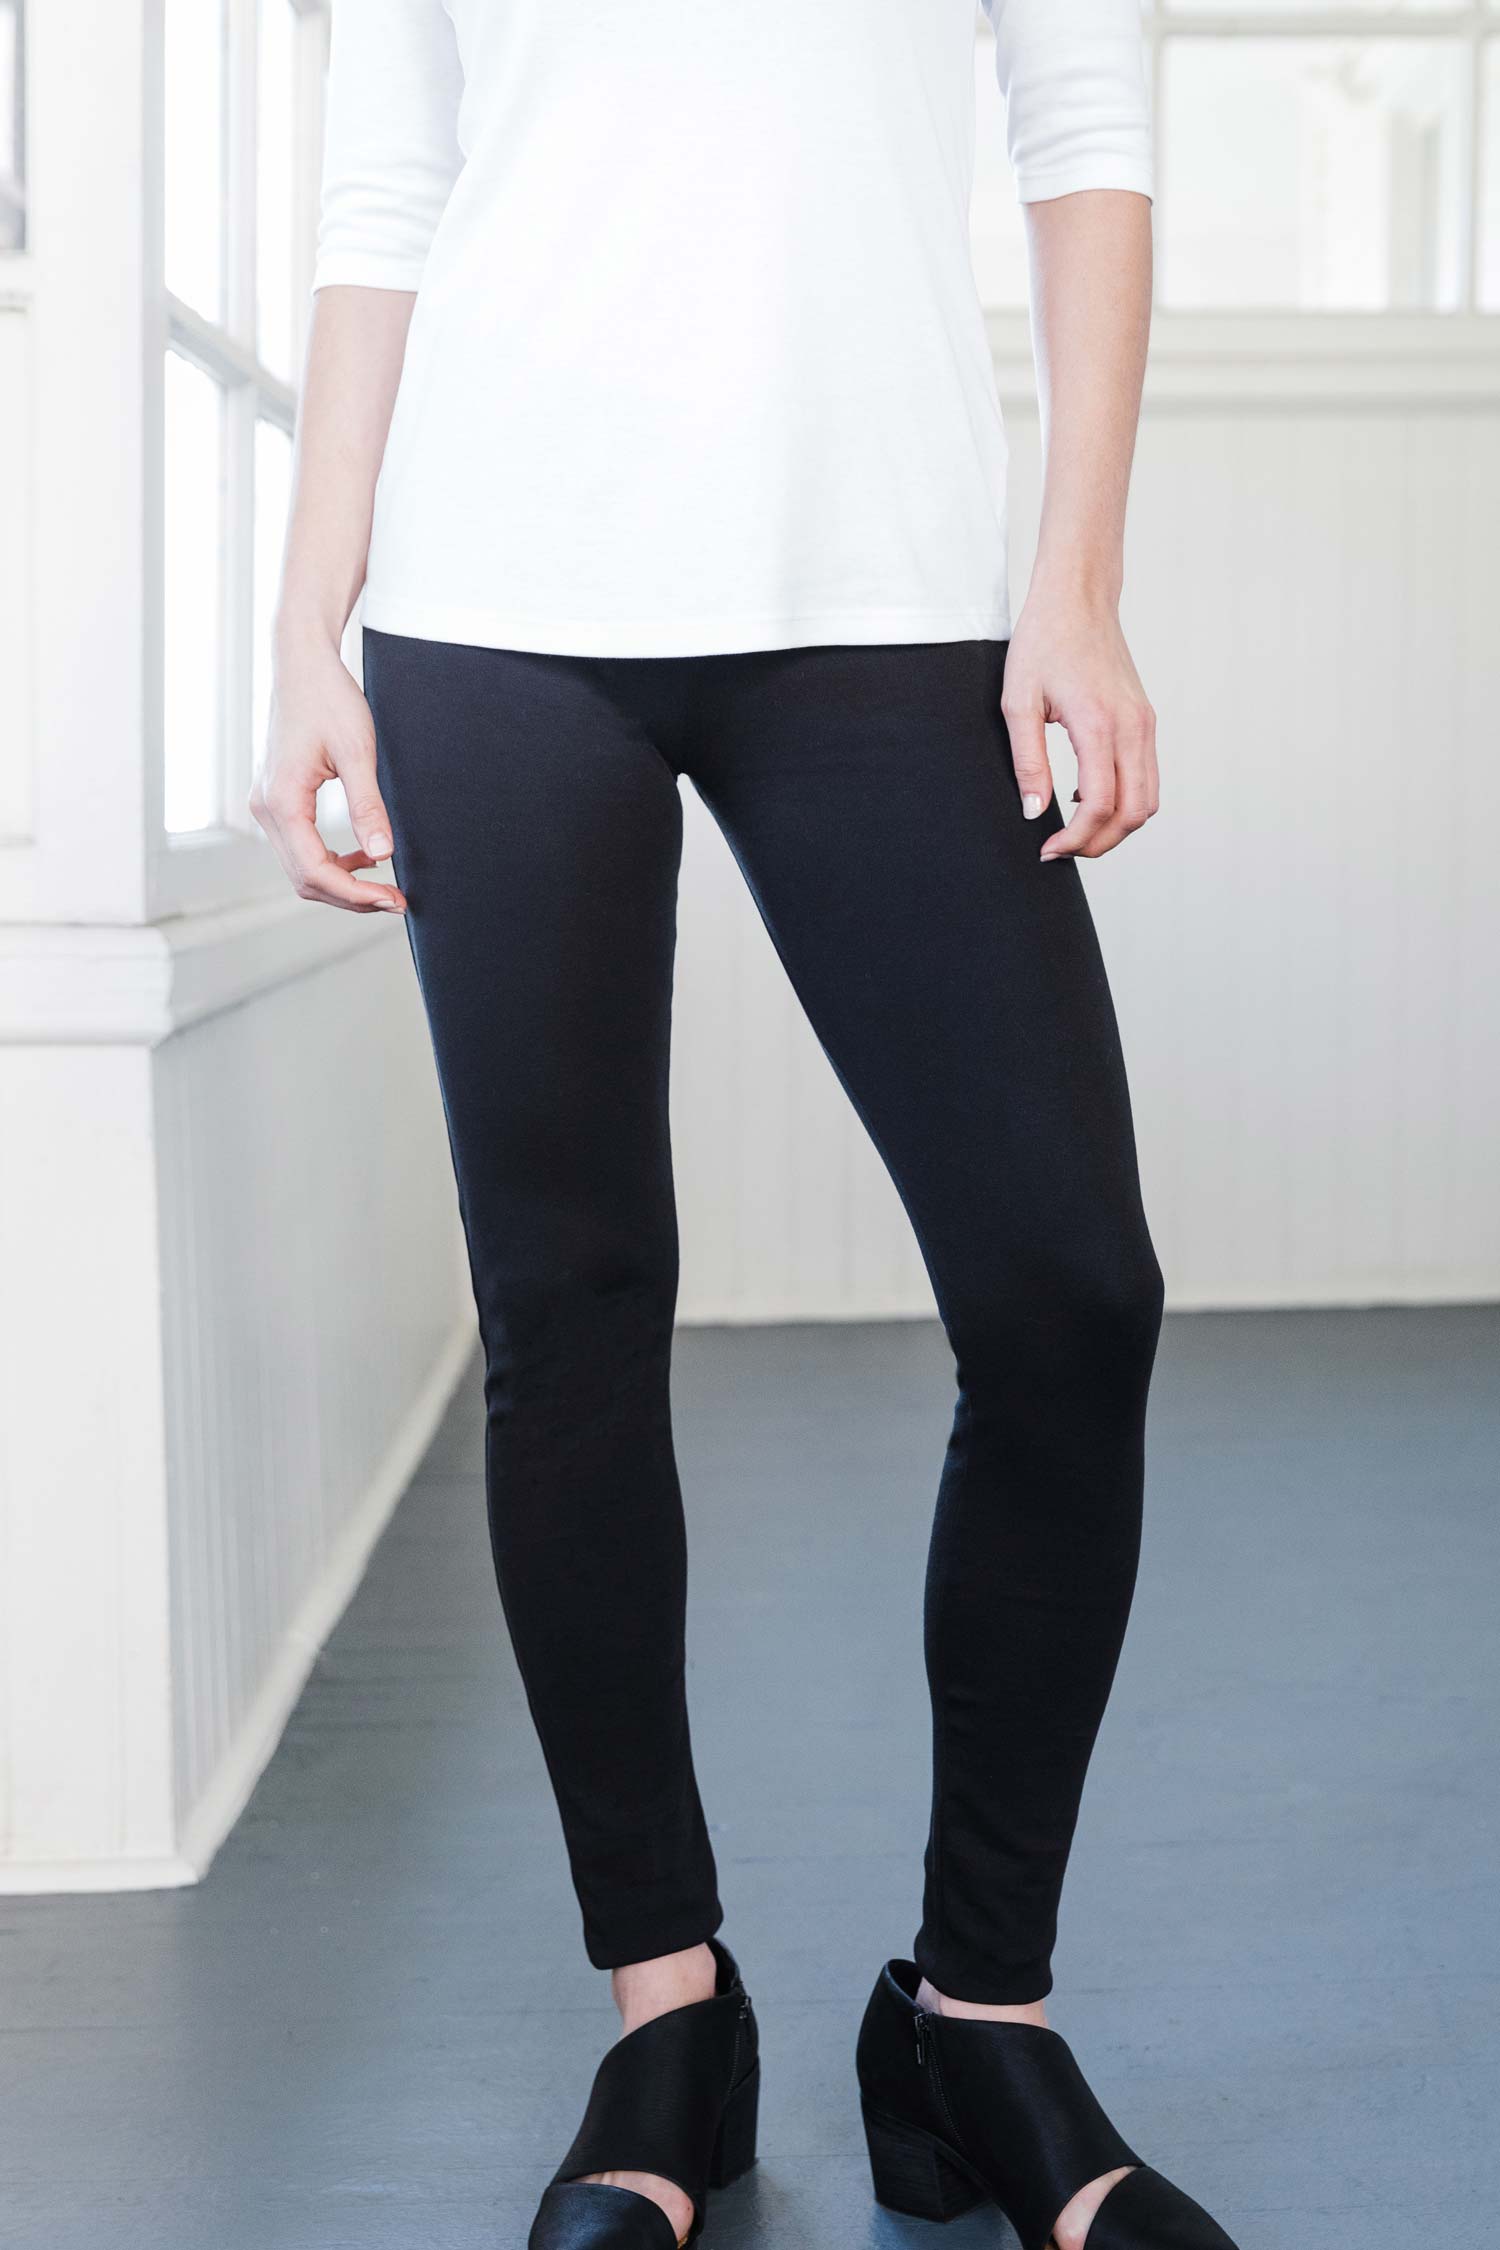 Buy Ankle Length Cotton Lycra Leggings & Look Elegant and Feel The